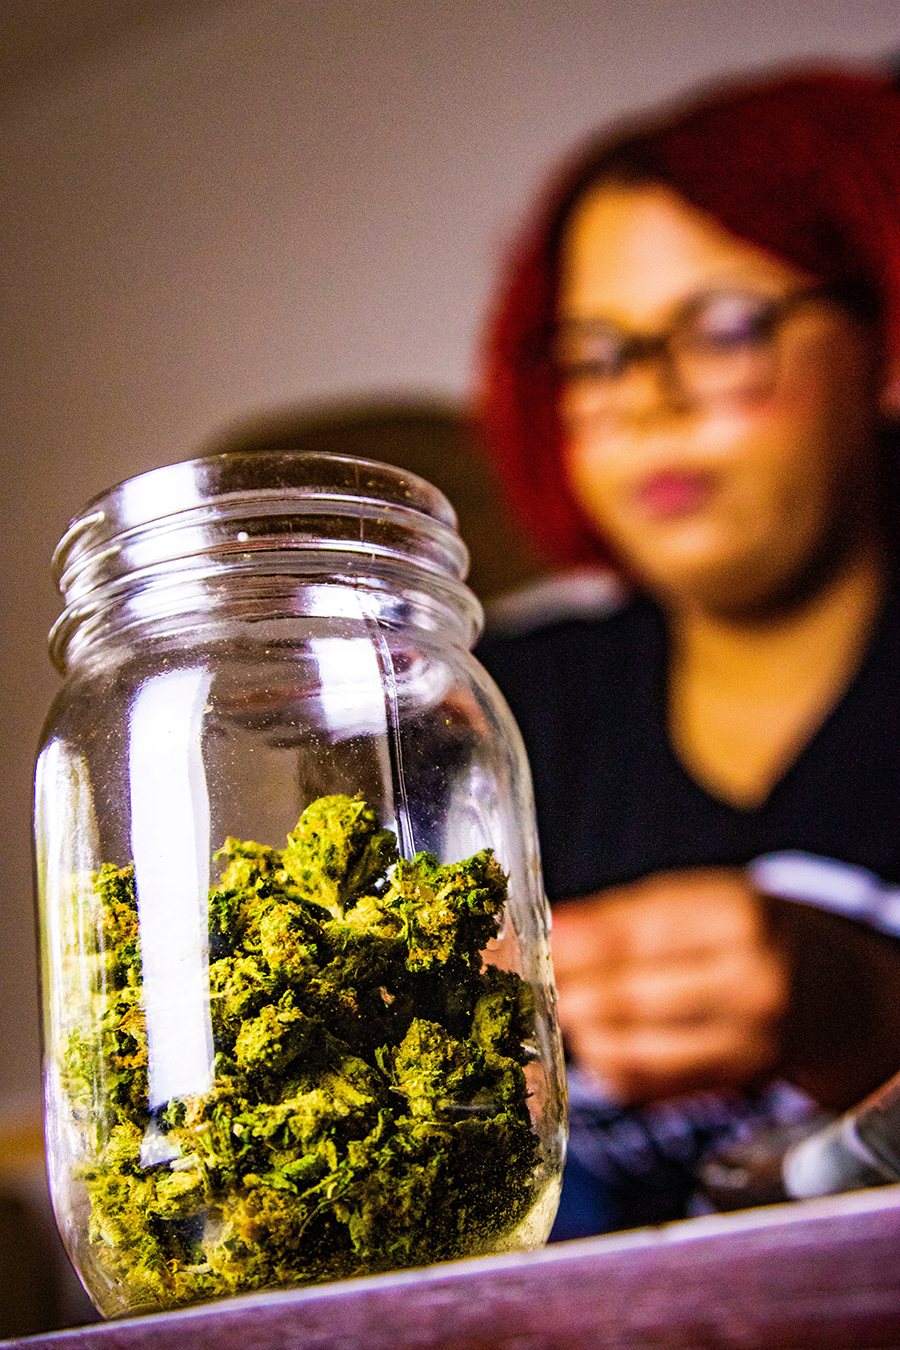 Keeping medical cannabis in a glass jar will help it stay fresh